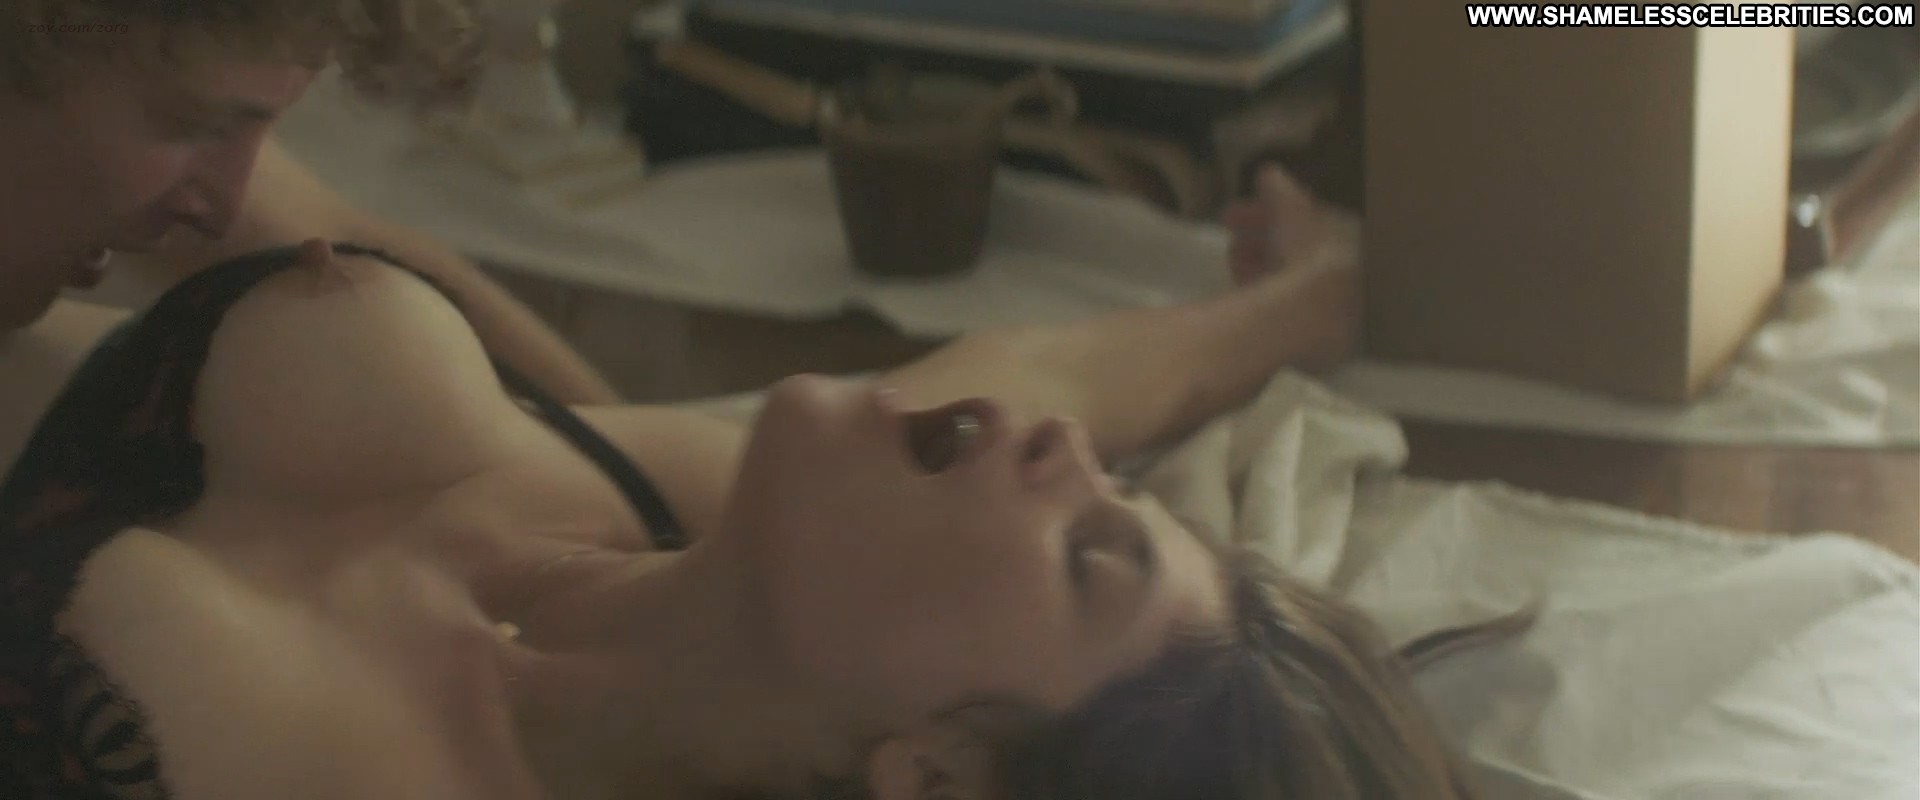 Gemma Bovery Gemma Arterton Sex Posing Hot Nude Hot Topless Celebrity Chair...